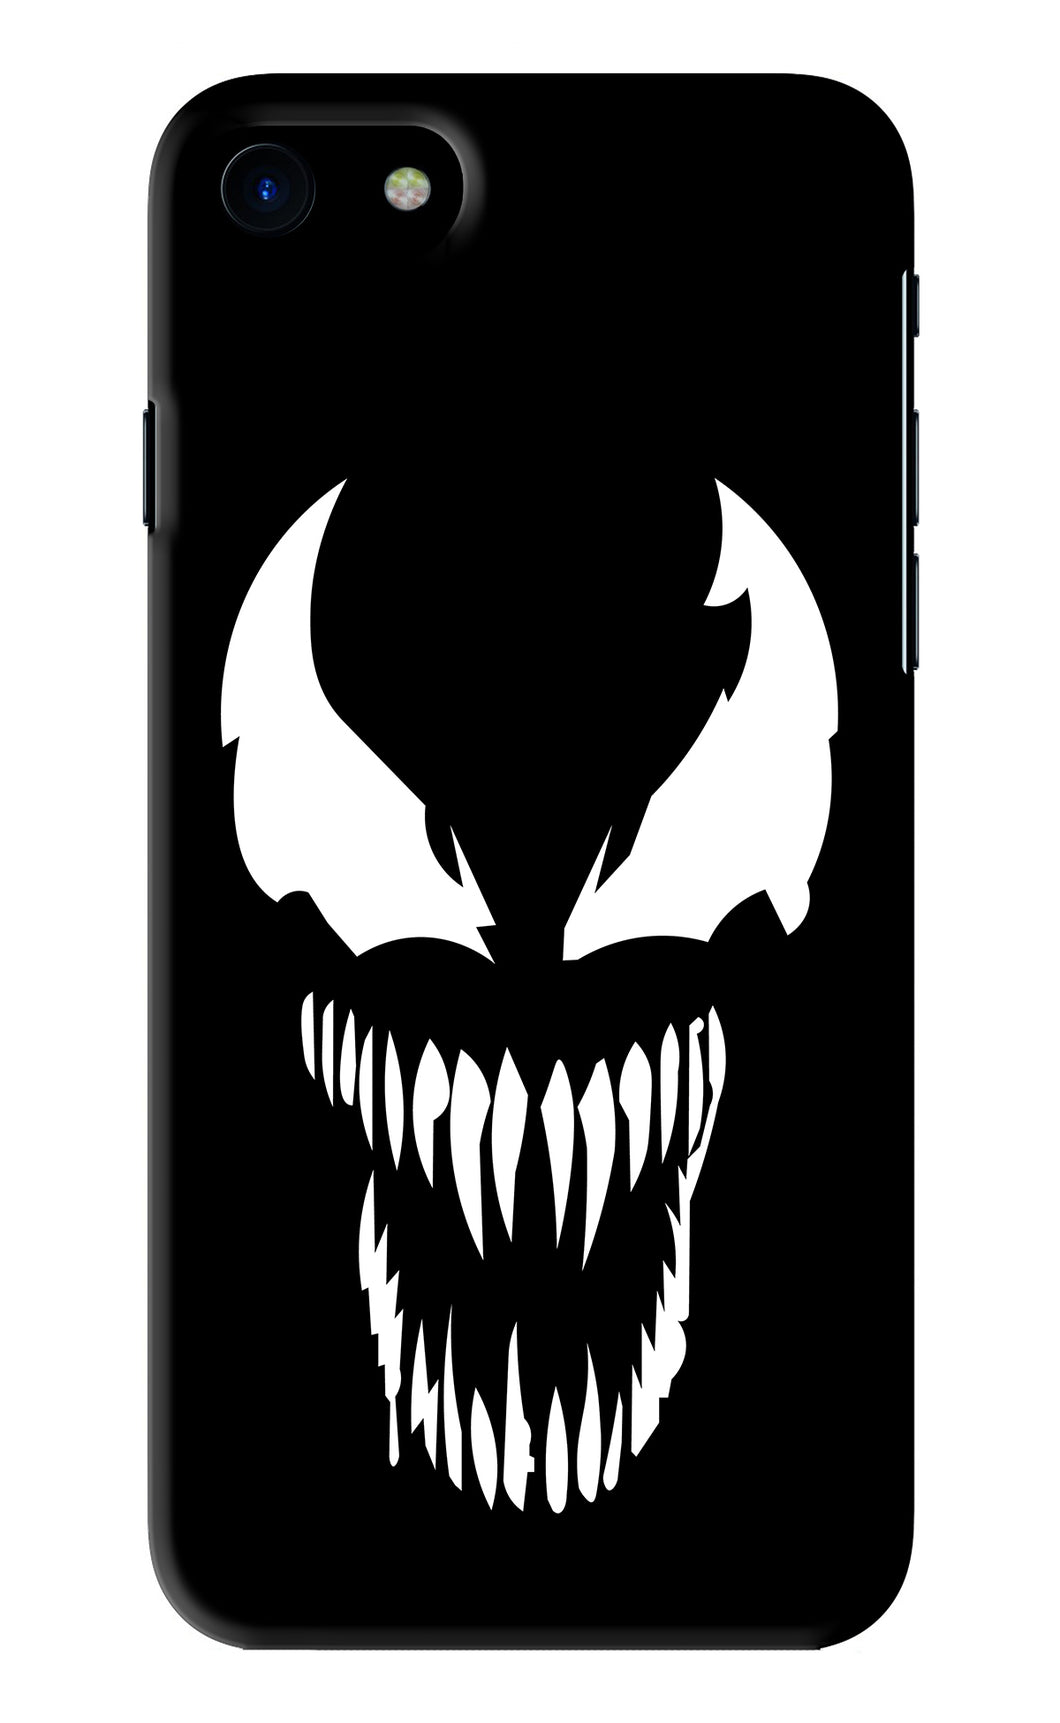 Venom iPhone 8 Back Skin Wrap